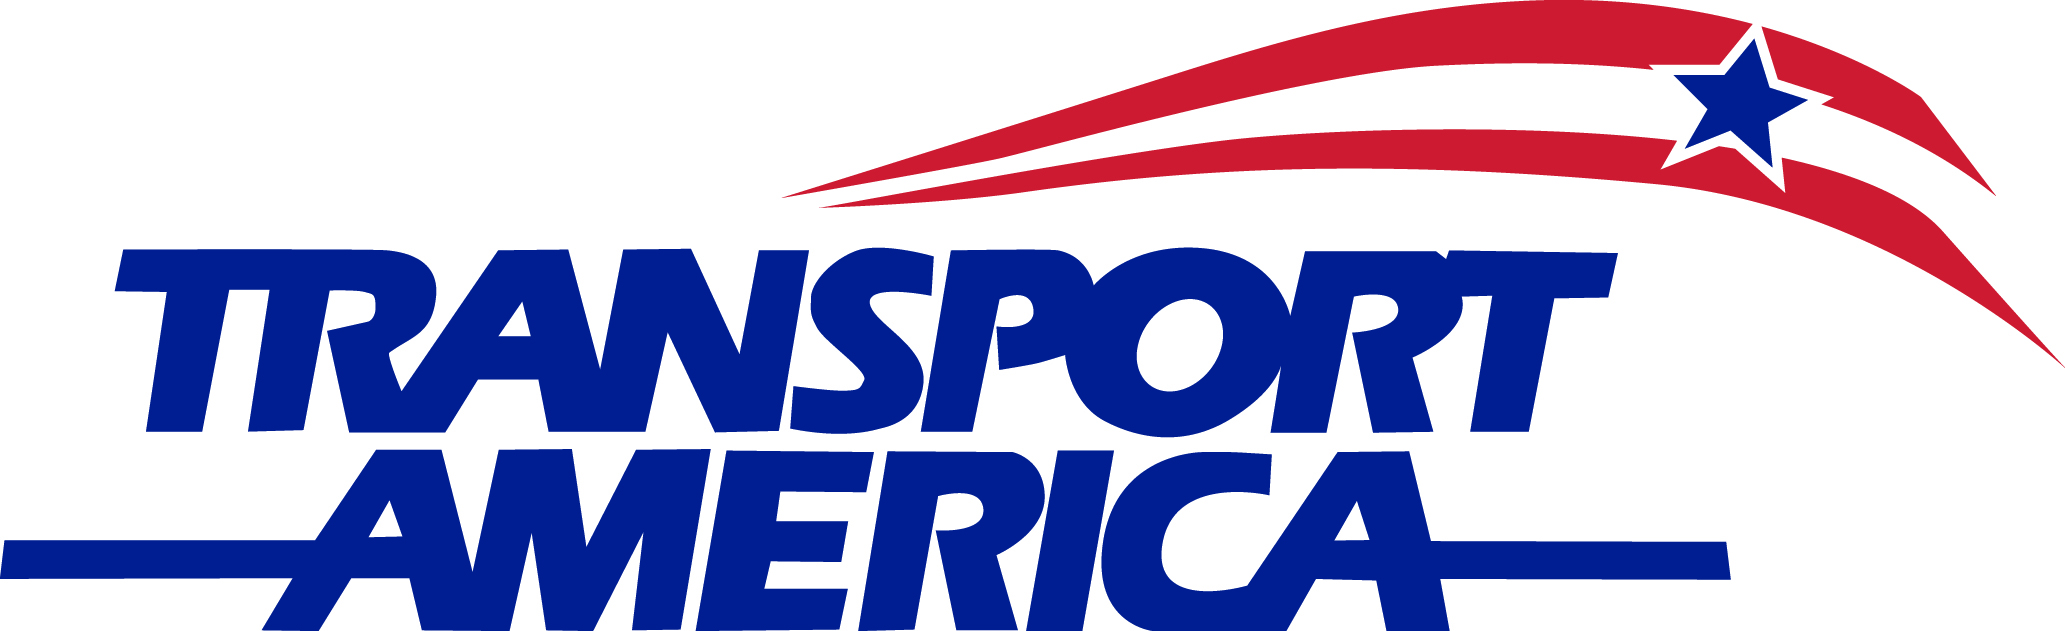 Transport America Logo